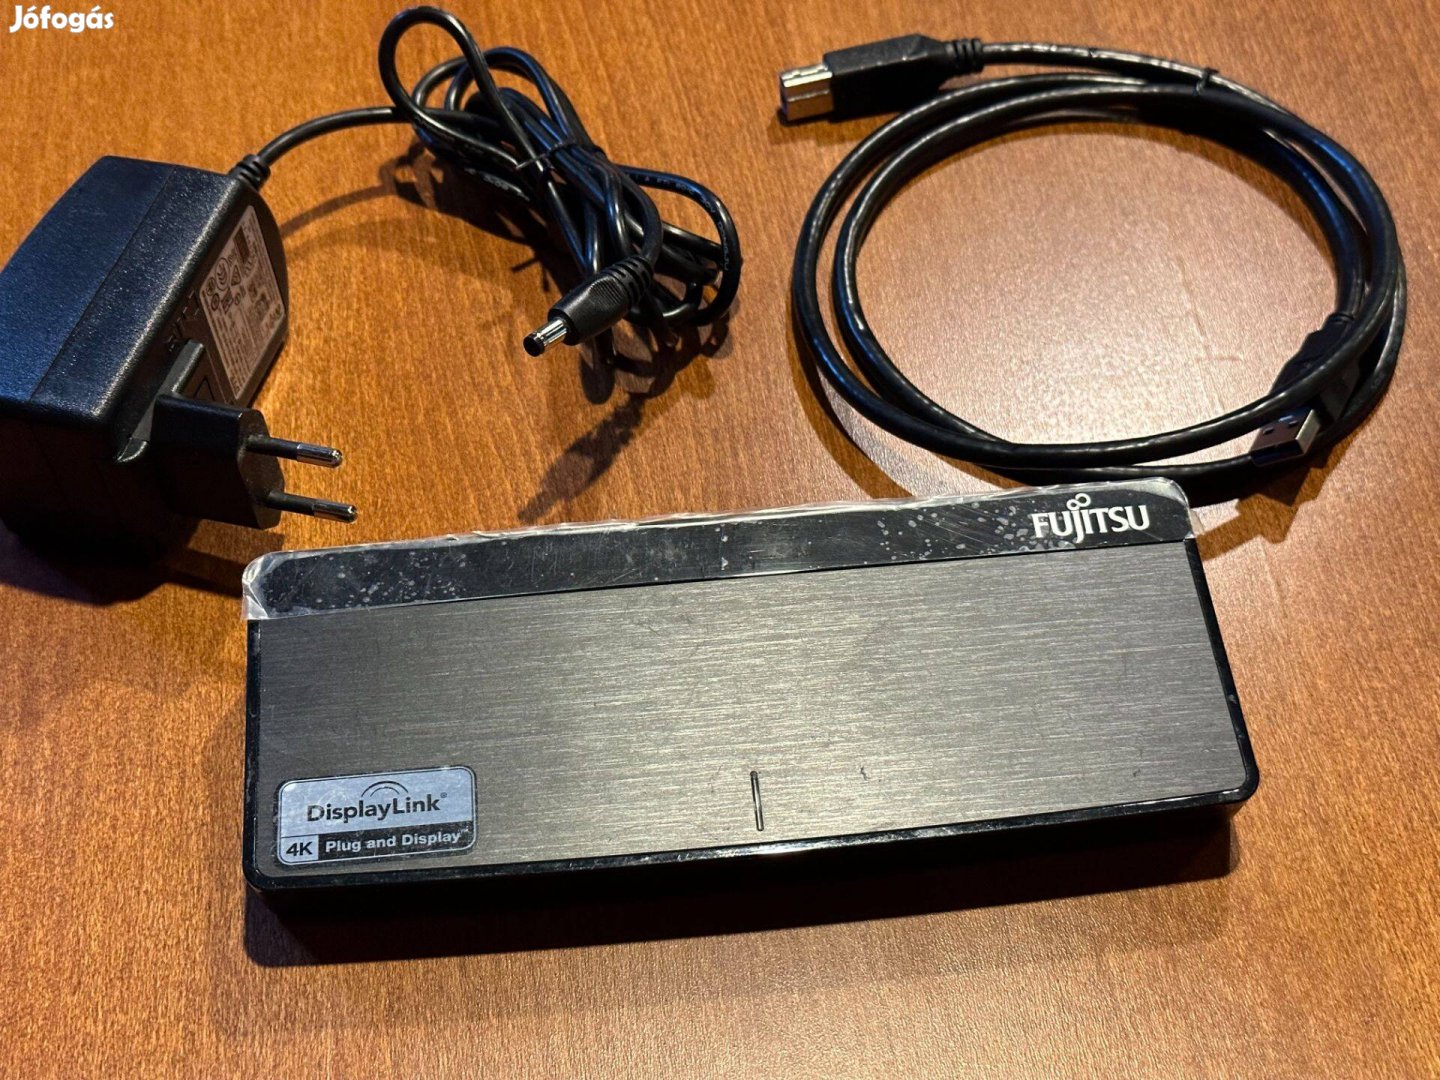 Fujitsu PR8.1 USB3-as dokkoló, port replicator eladó